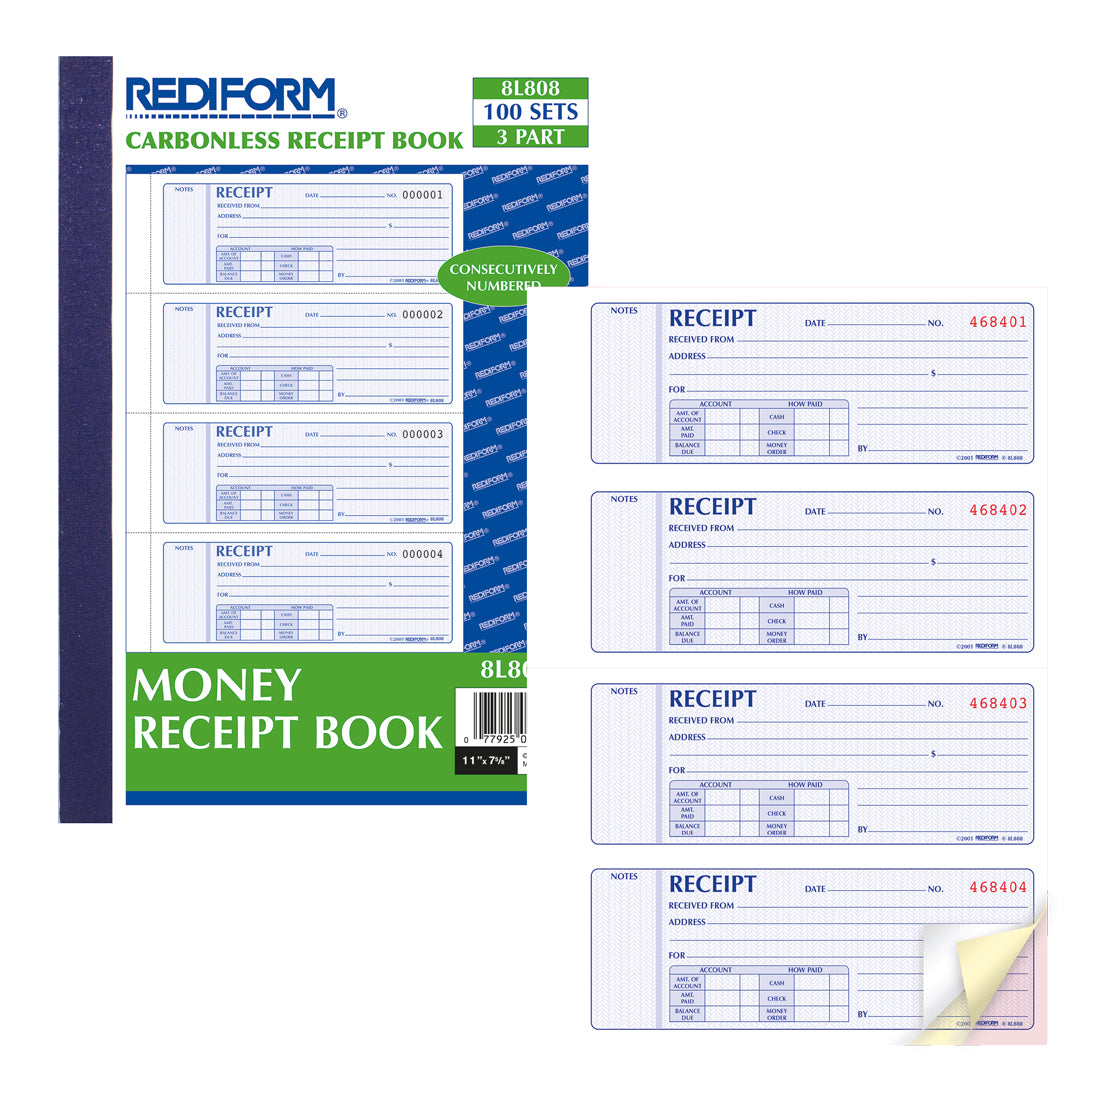 Money Receipt Book 8L808